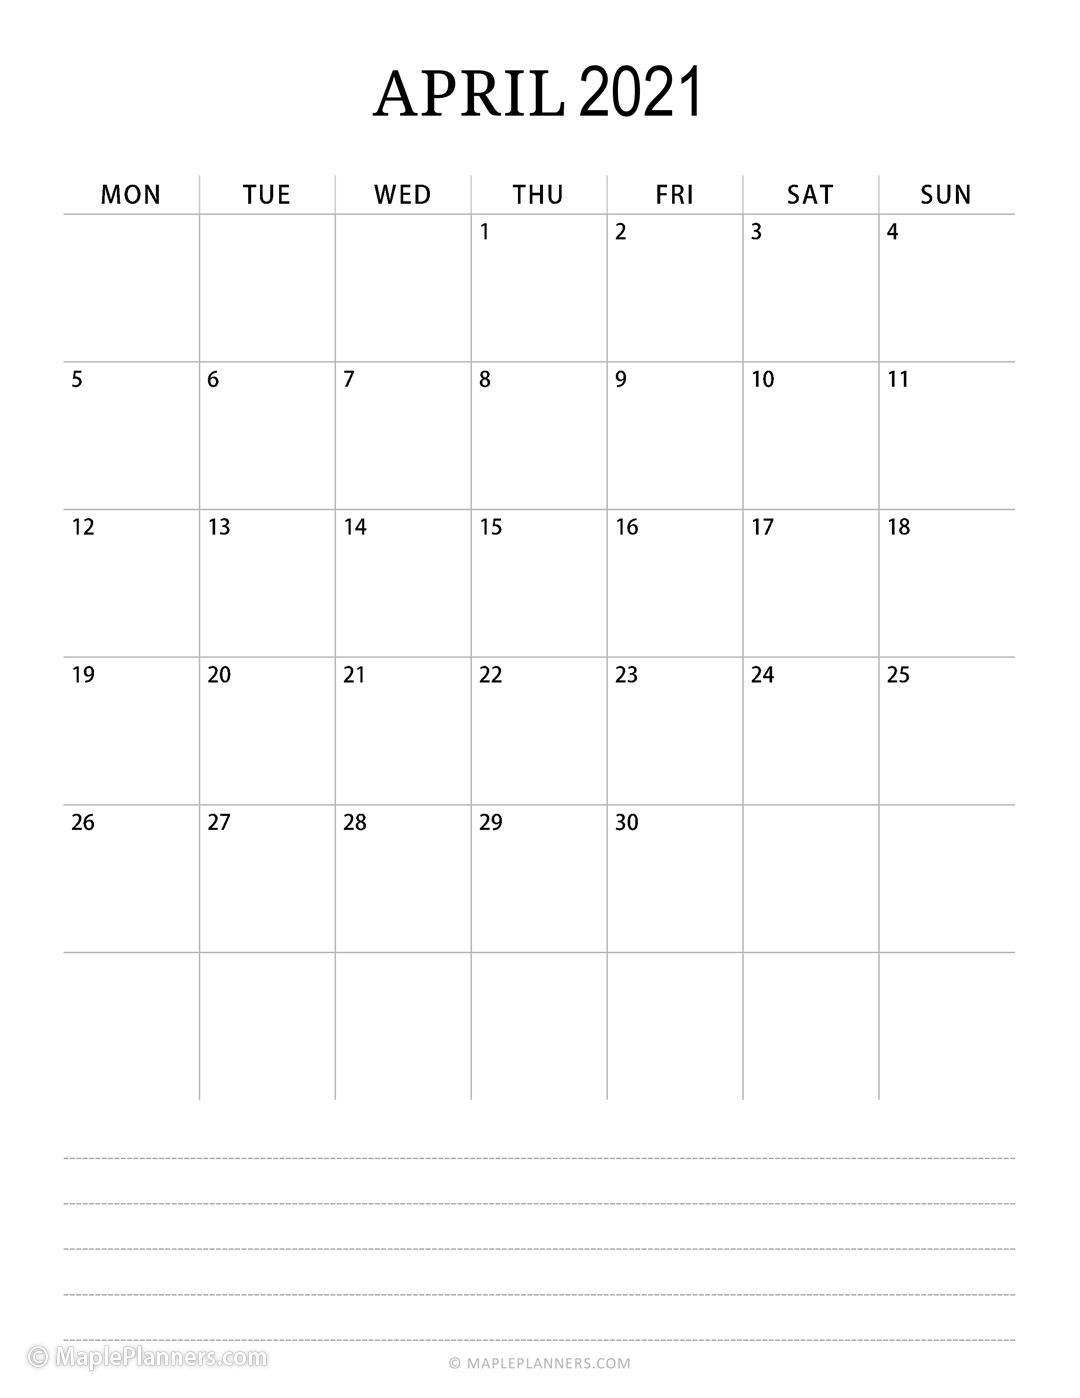 April Monthly Calendar 2021 Vertical Layout